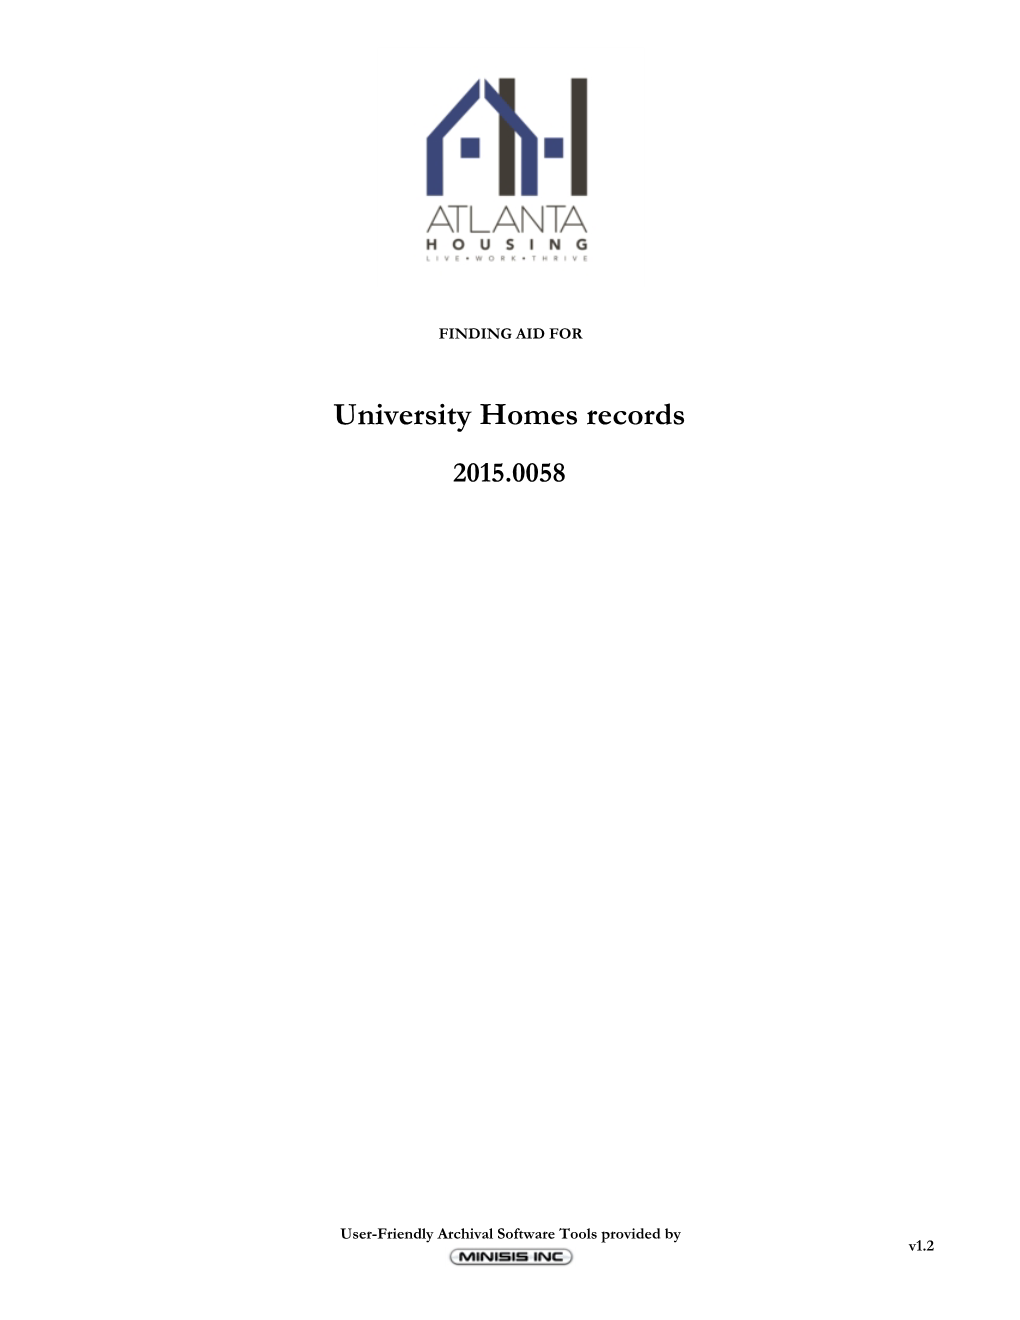 2015.0058 University Homes Records